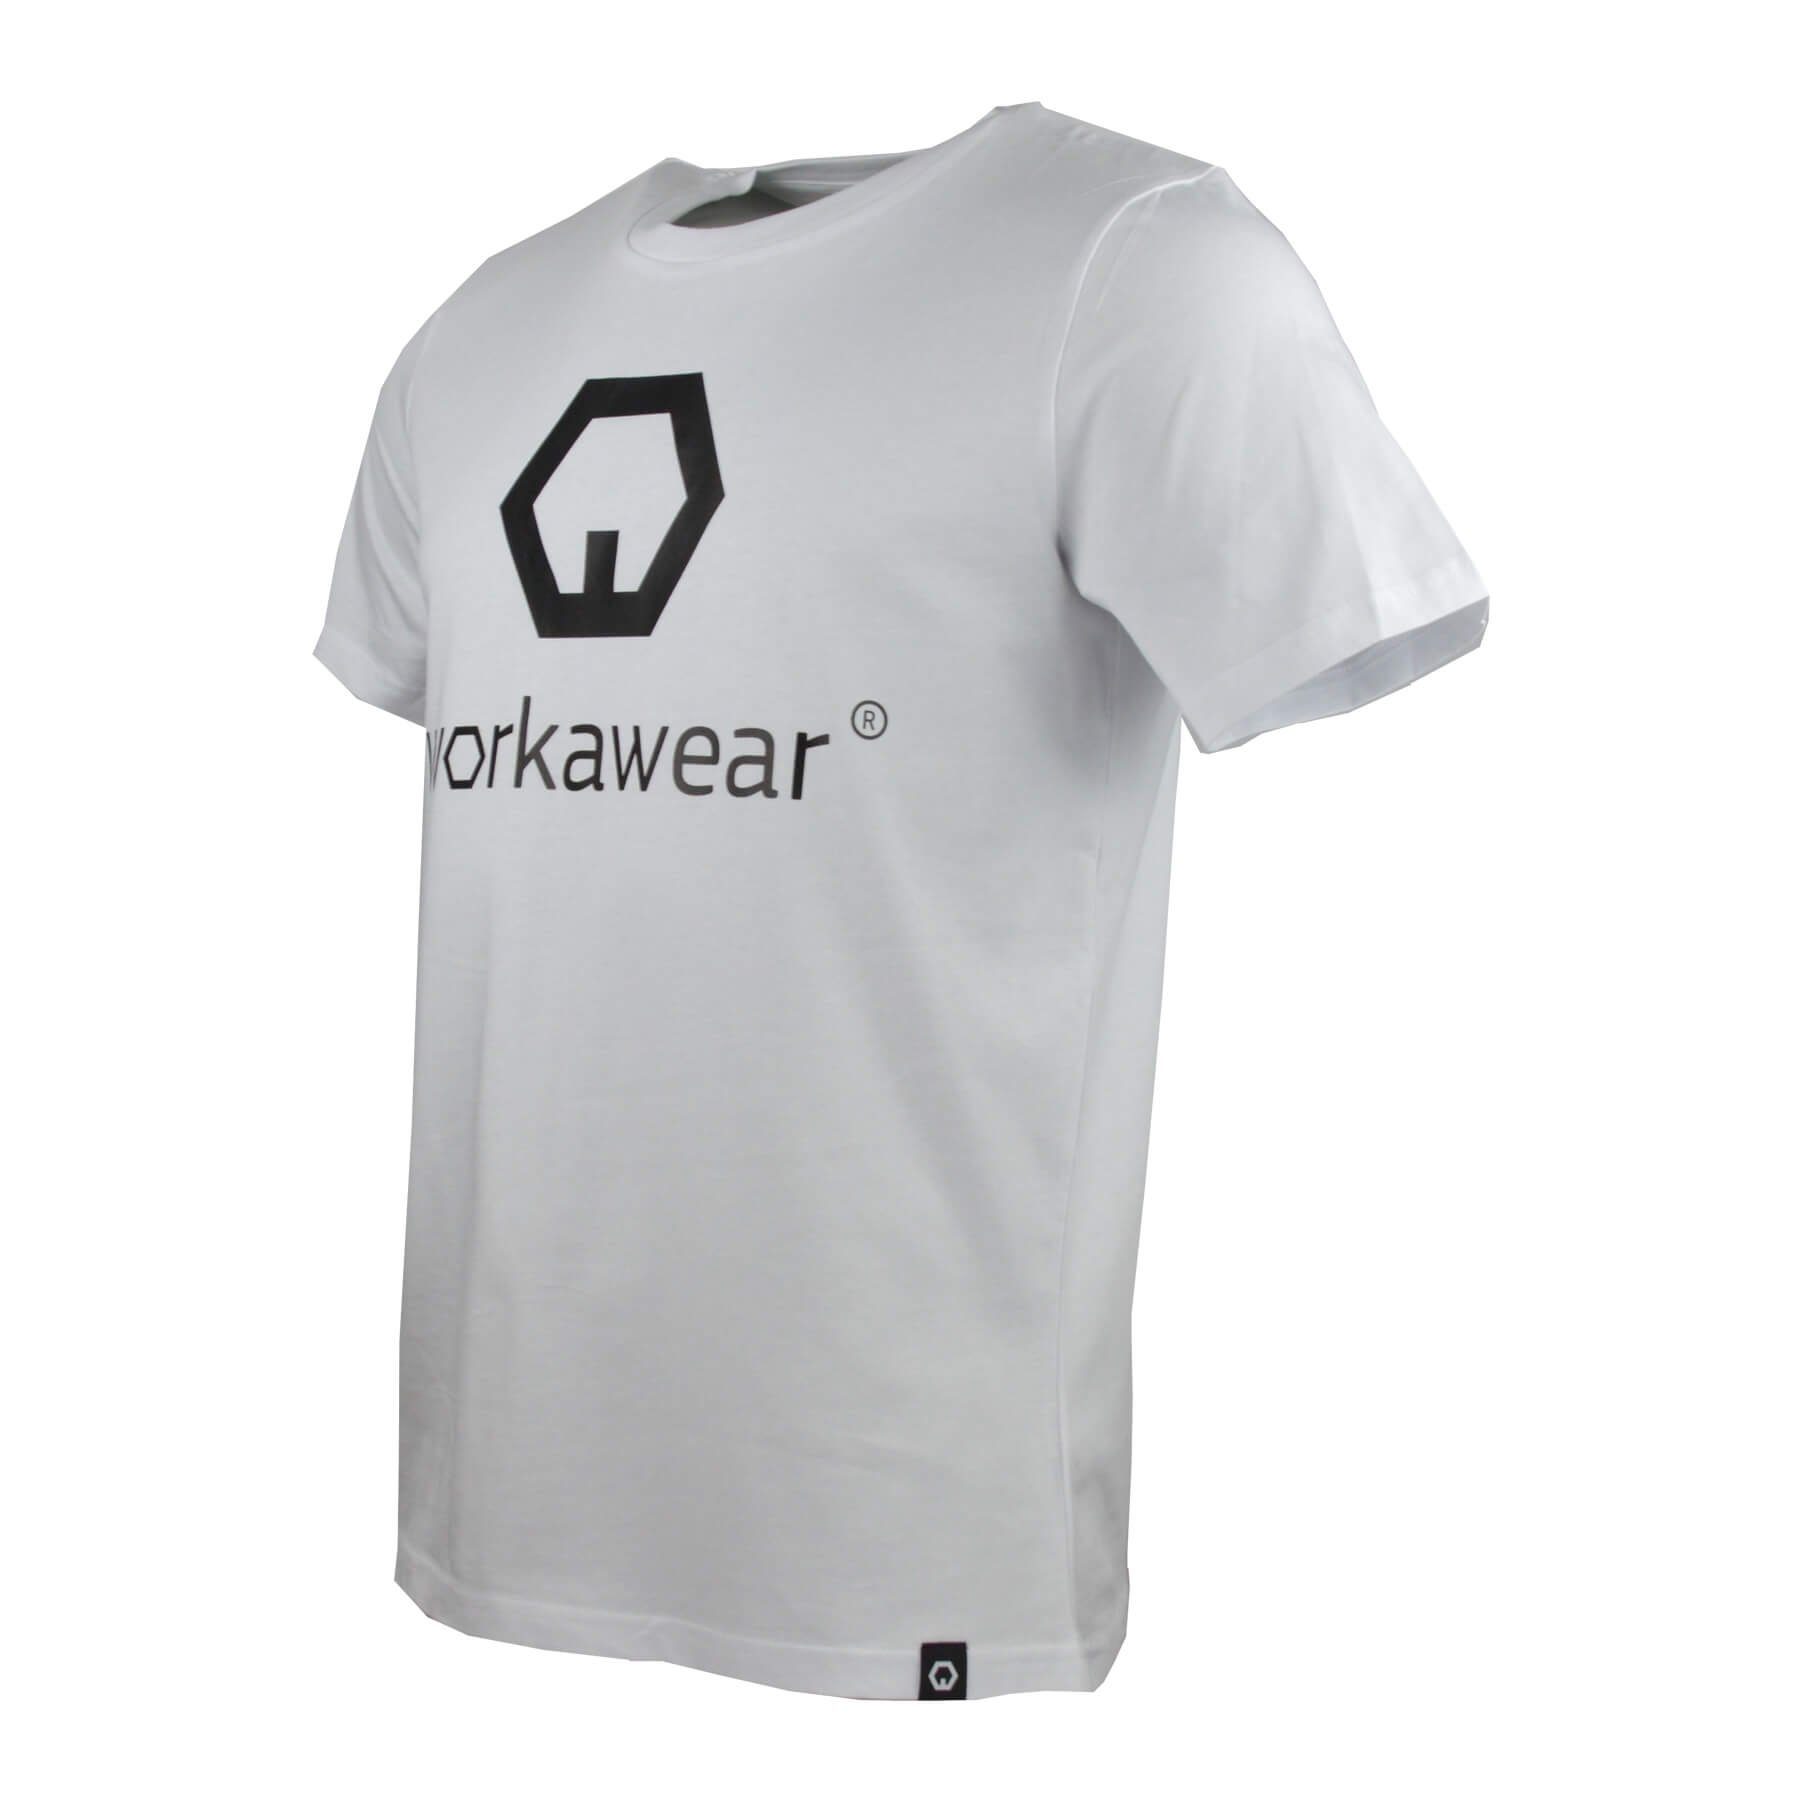 workawear T-Shirt Bio Baumwolle, nachhaltig & Workawear fair 100% Bio T-Shirt